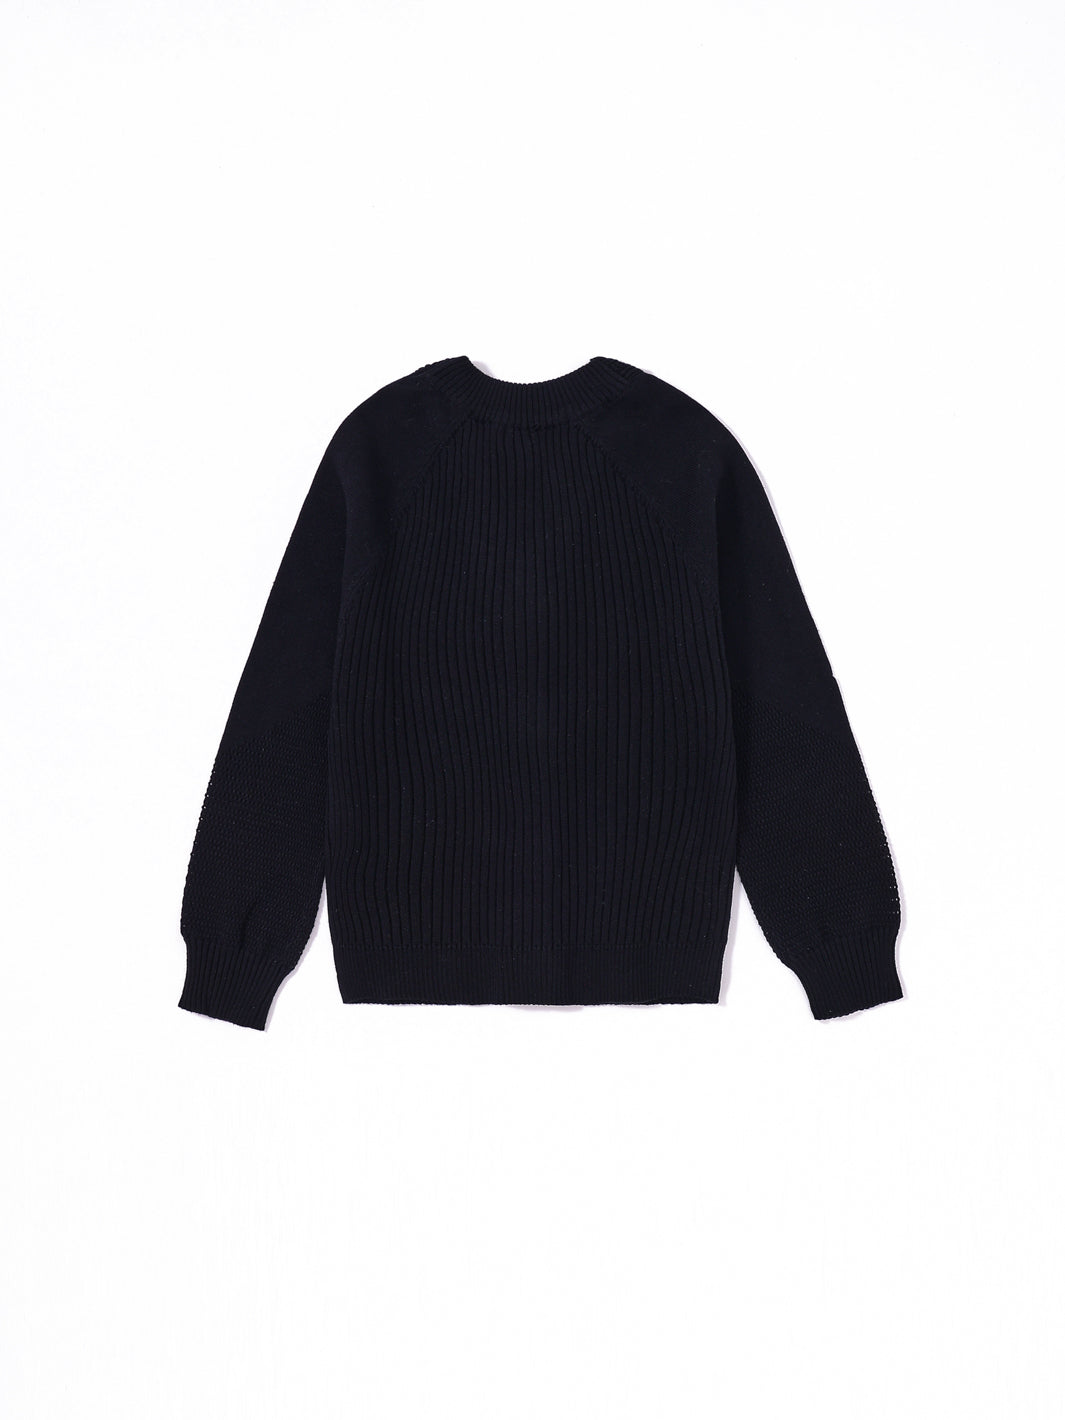 Eyelet Cardigan Sweater - Black